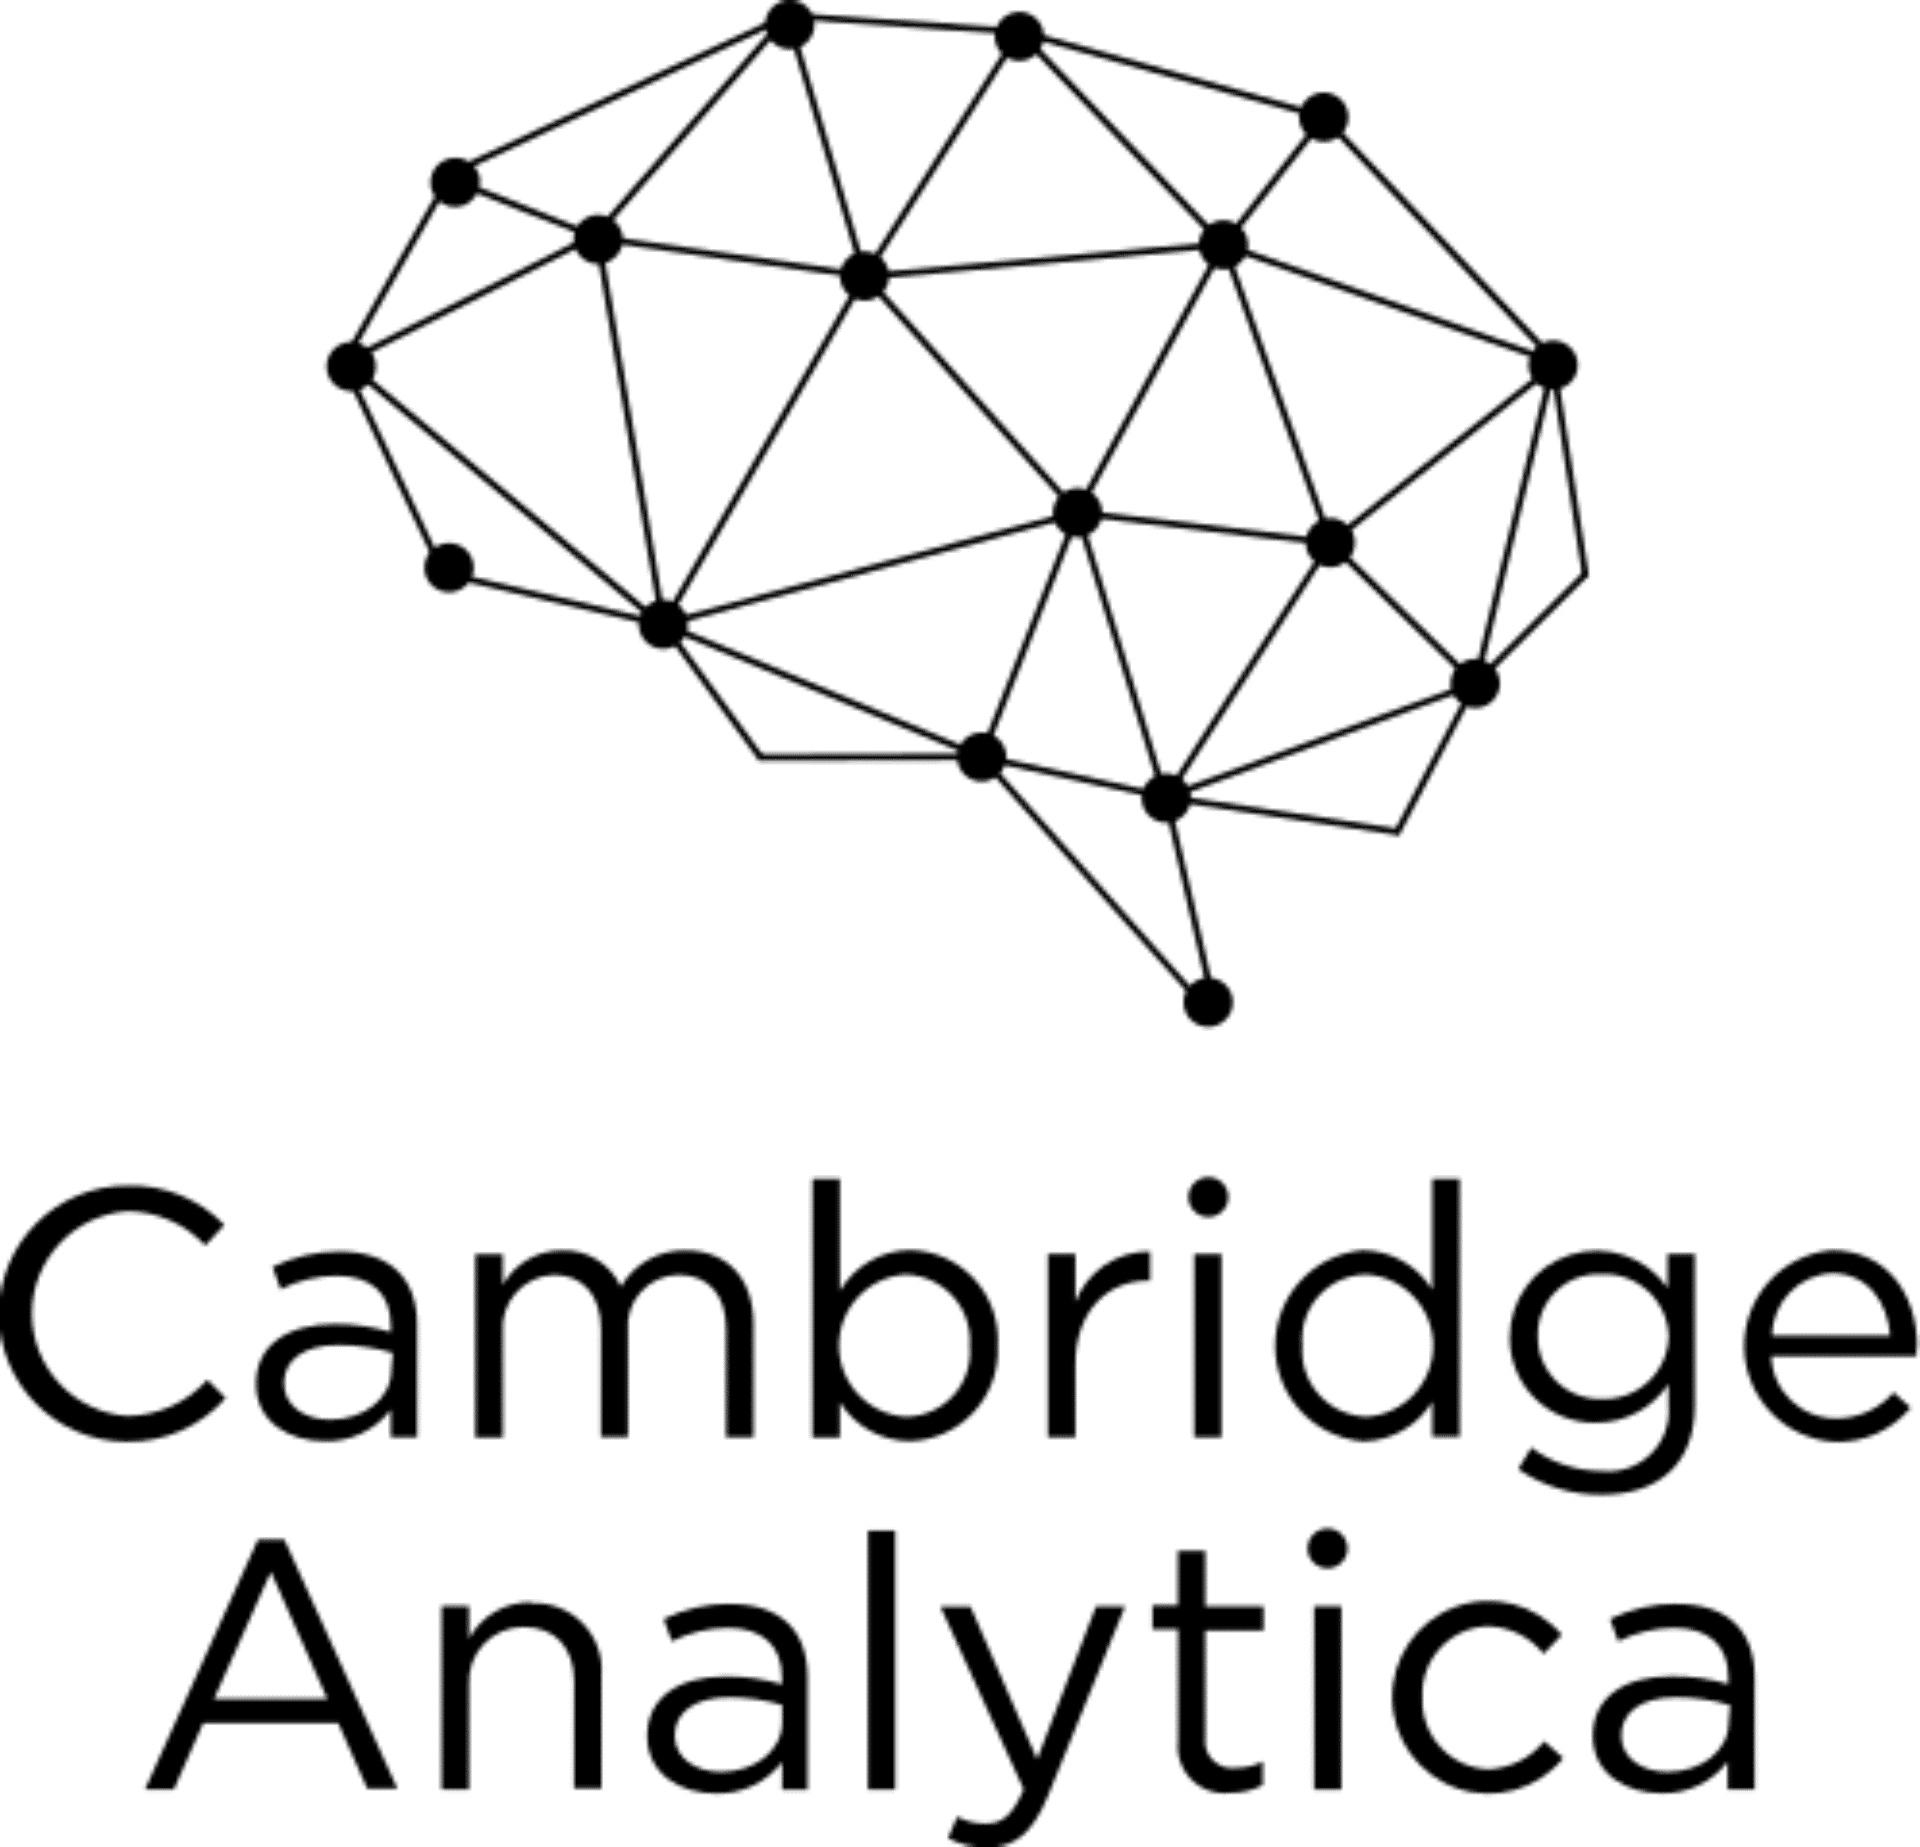 Cambridge Analytica logo.